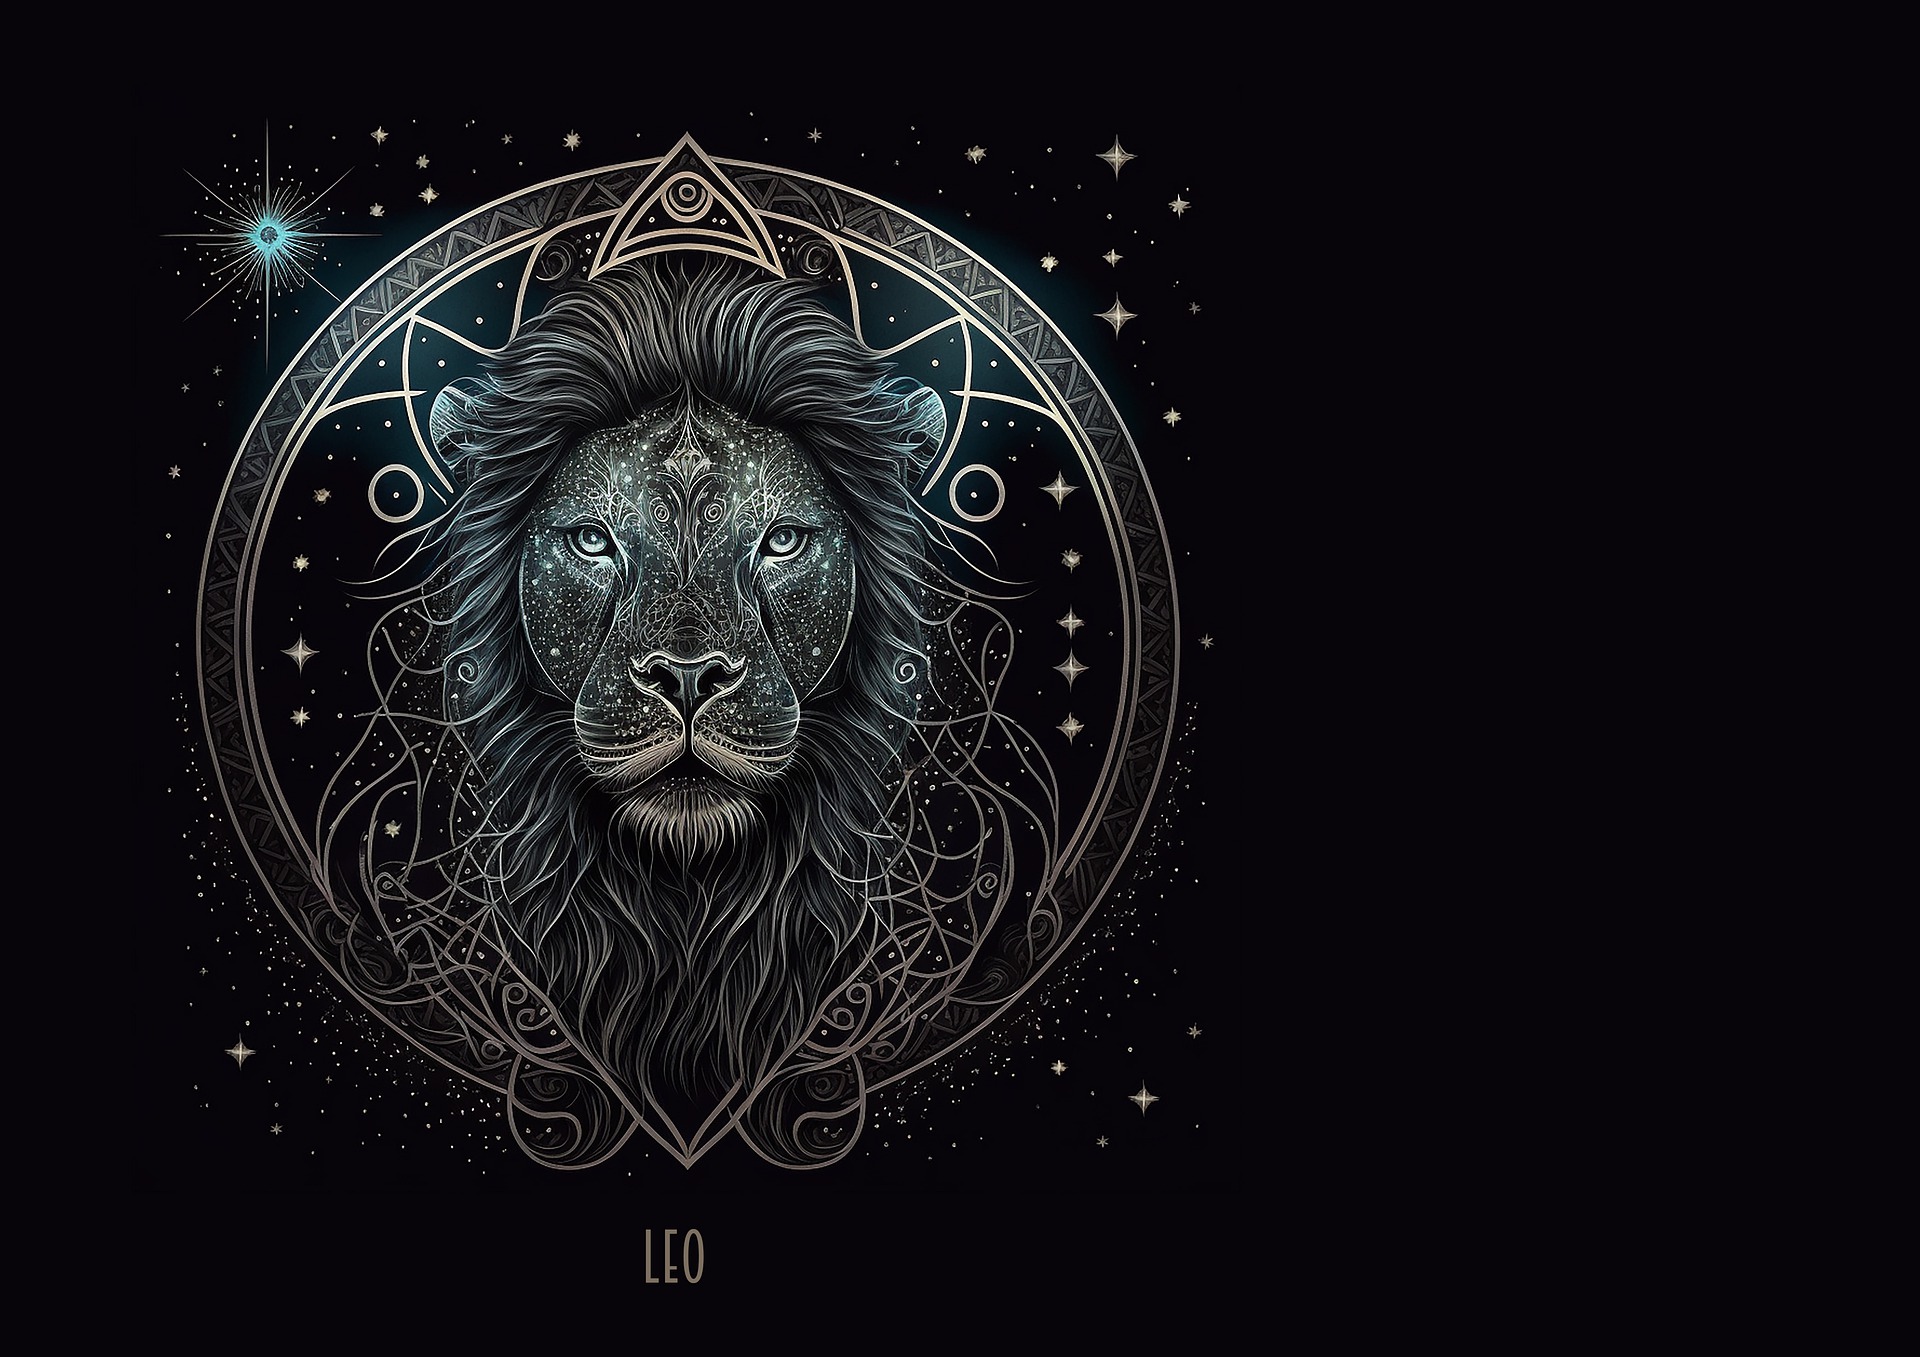 Illustration of the zodiac sign Leo | Source: Pixabay